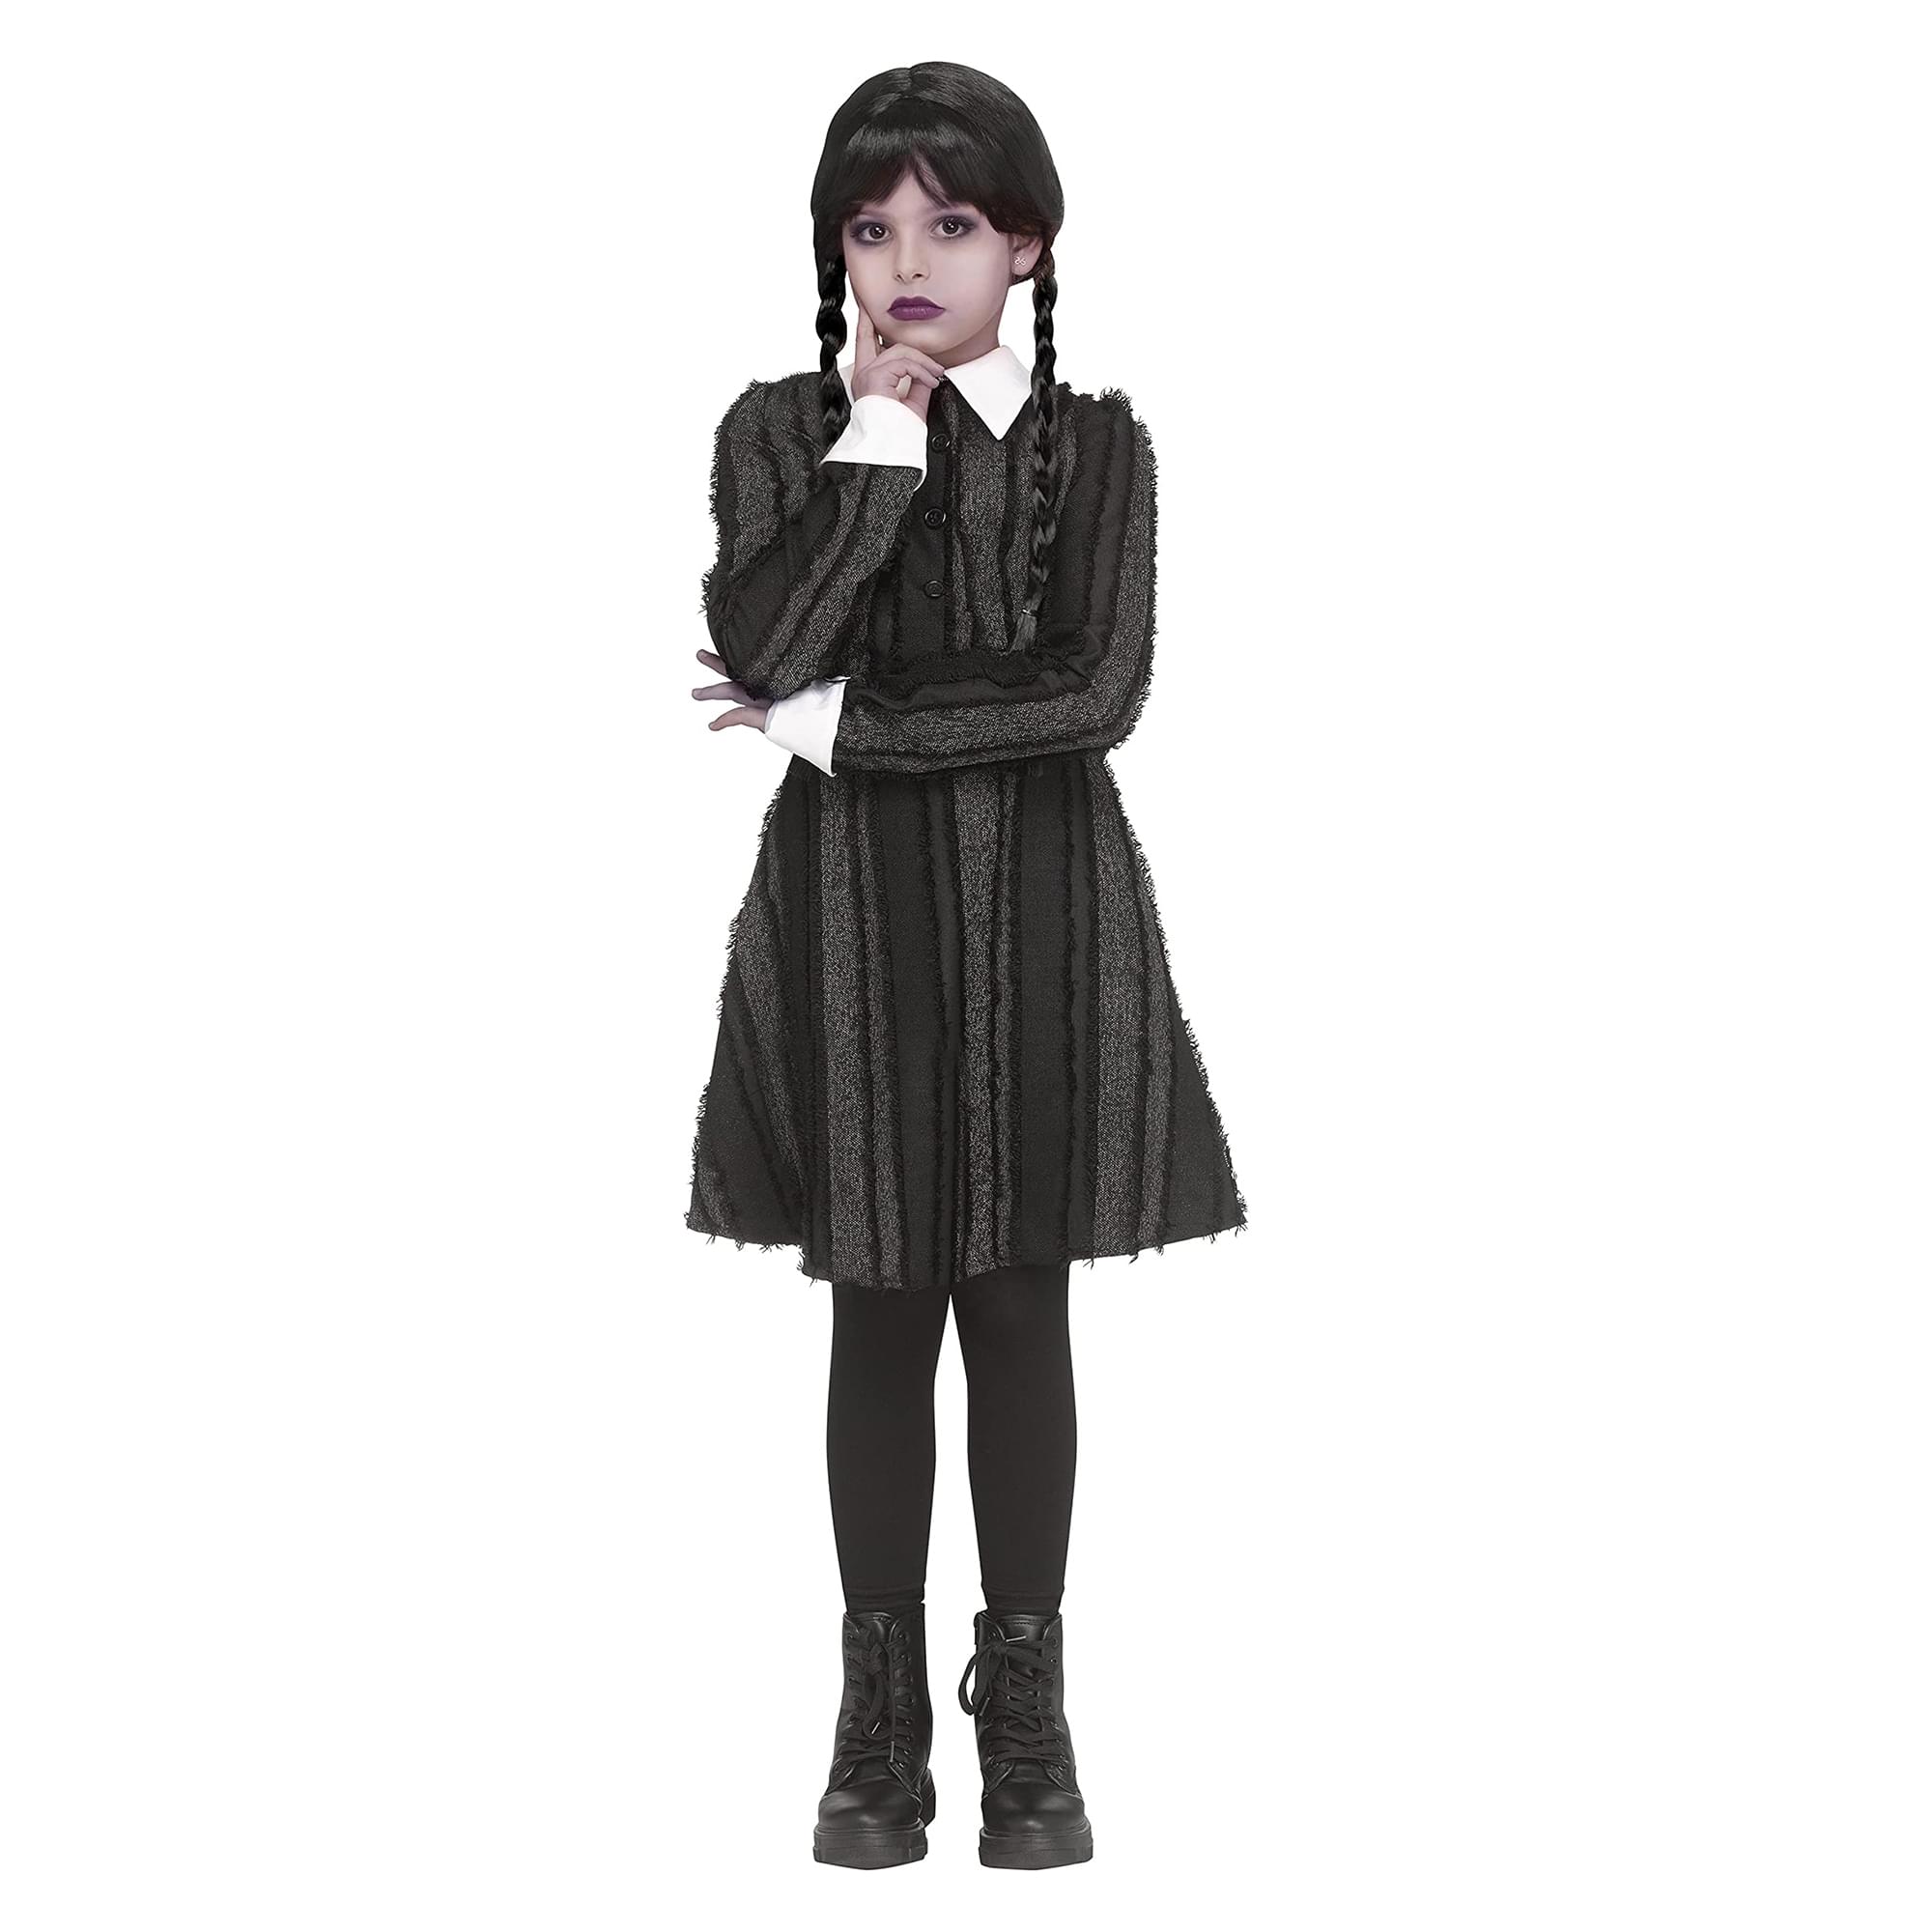 Photos - Fancy Dress Creepy Coed Child Costume FNW-127502M-C